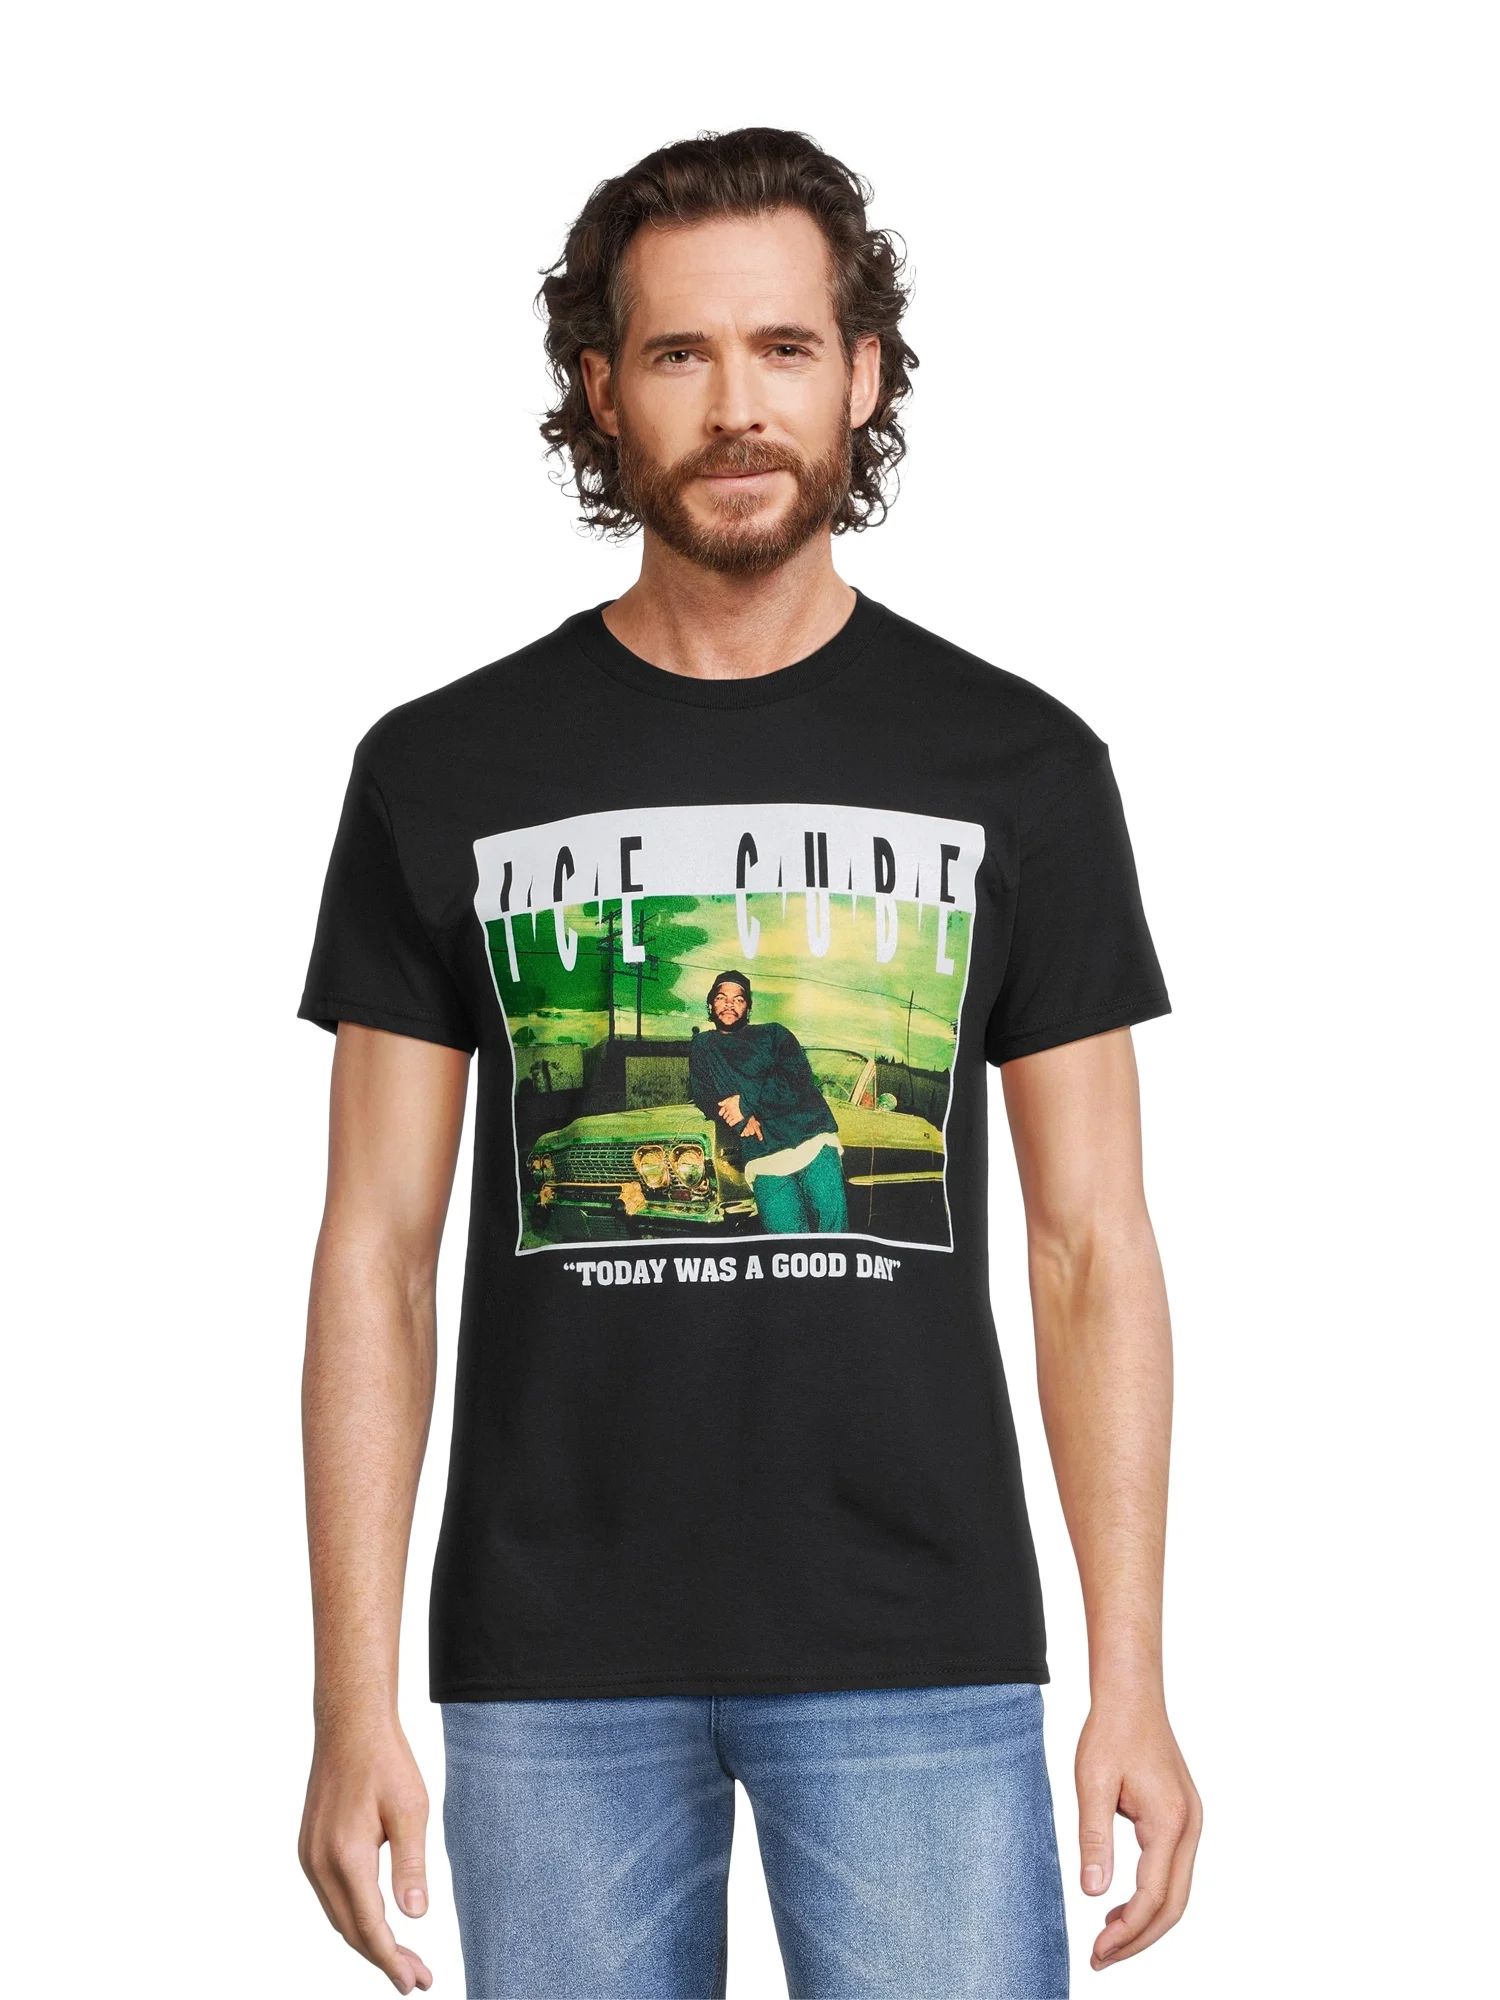 Ice Cube Men's & Big Men's Graphic Tee Shirts, Sizes S-3XL | Walmart (US)